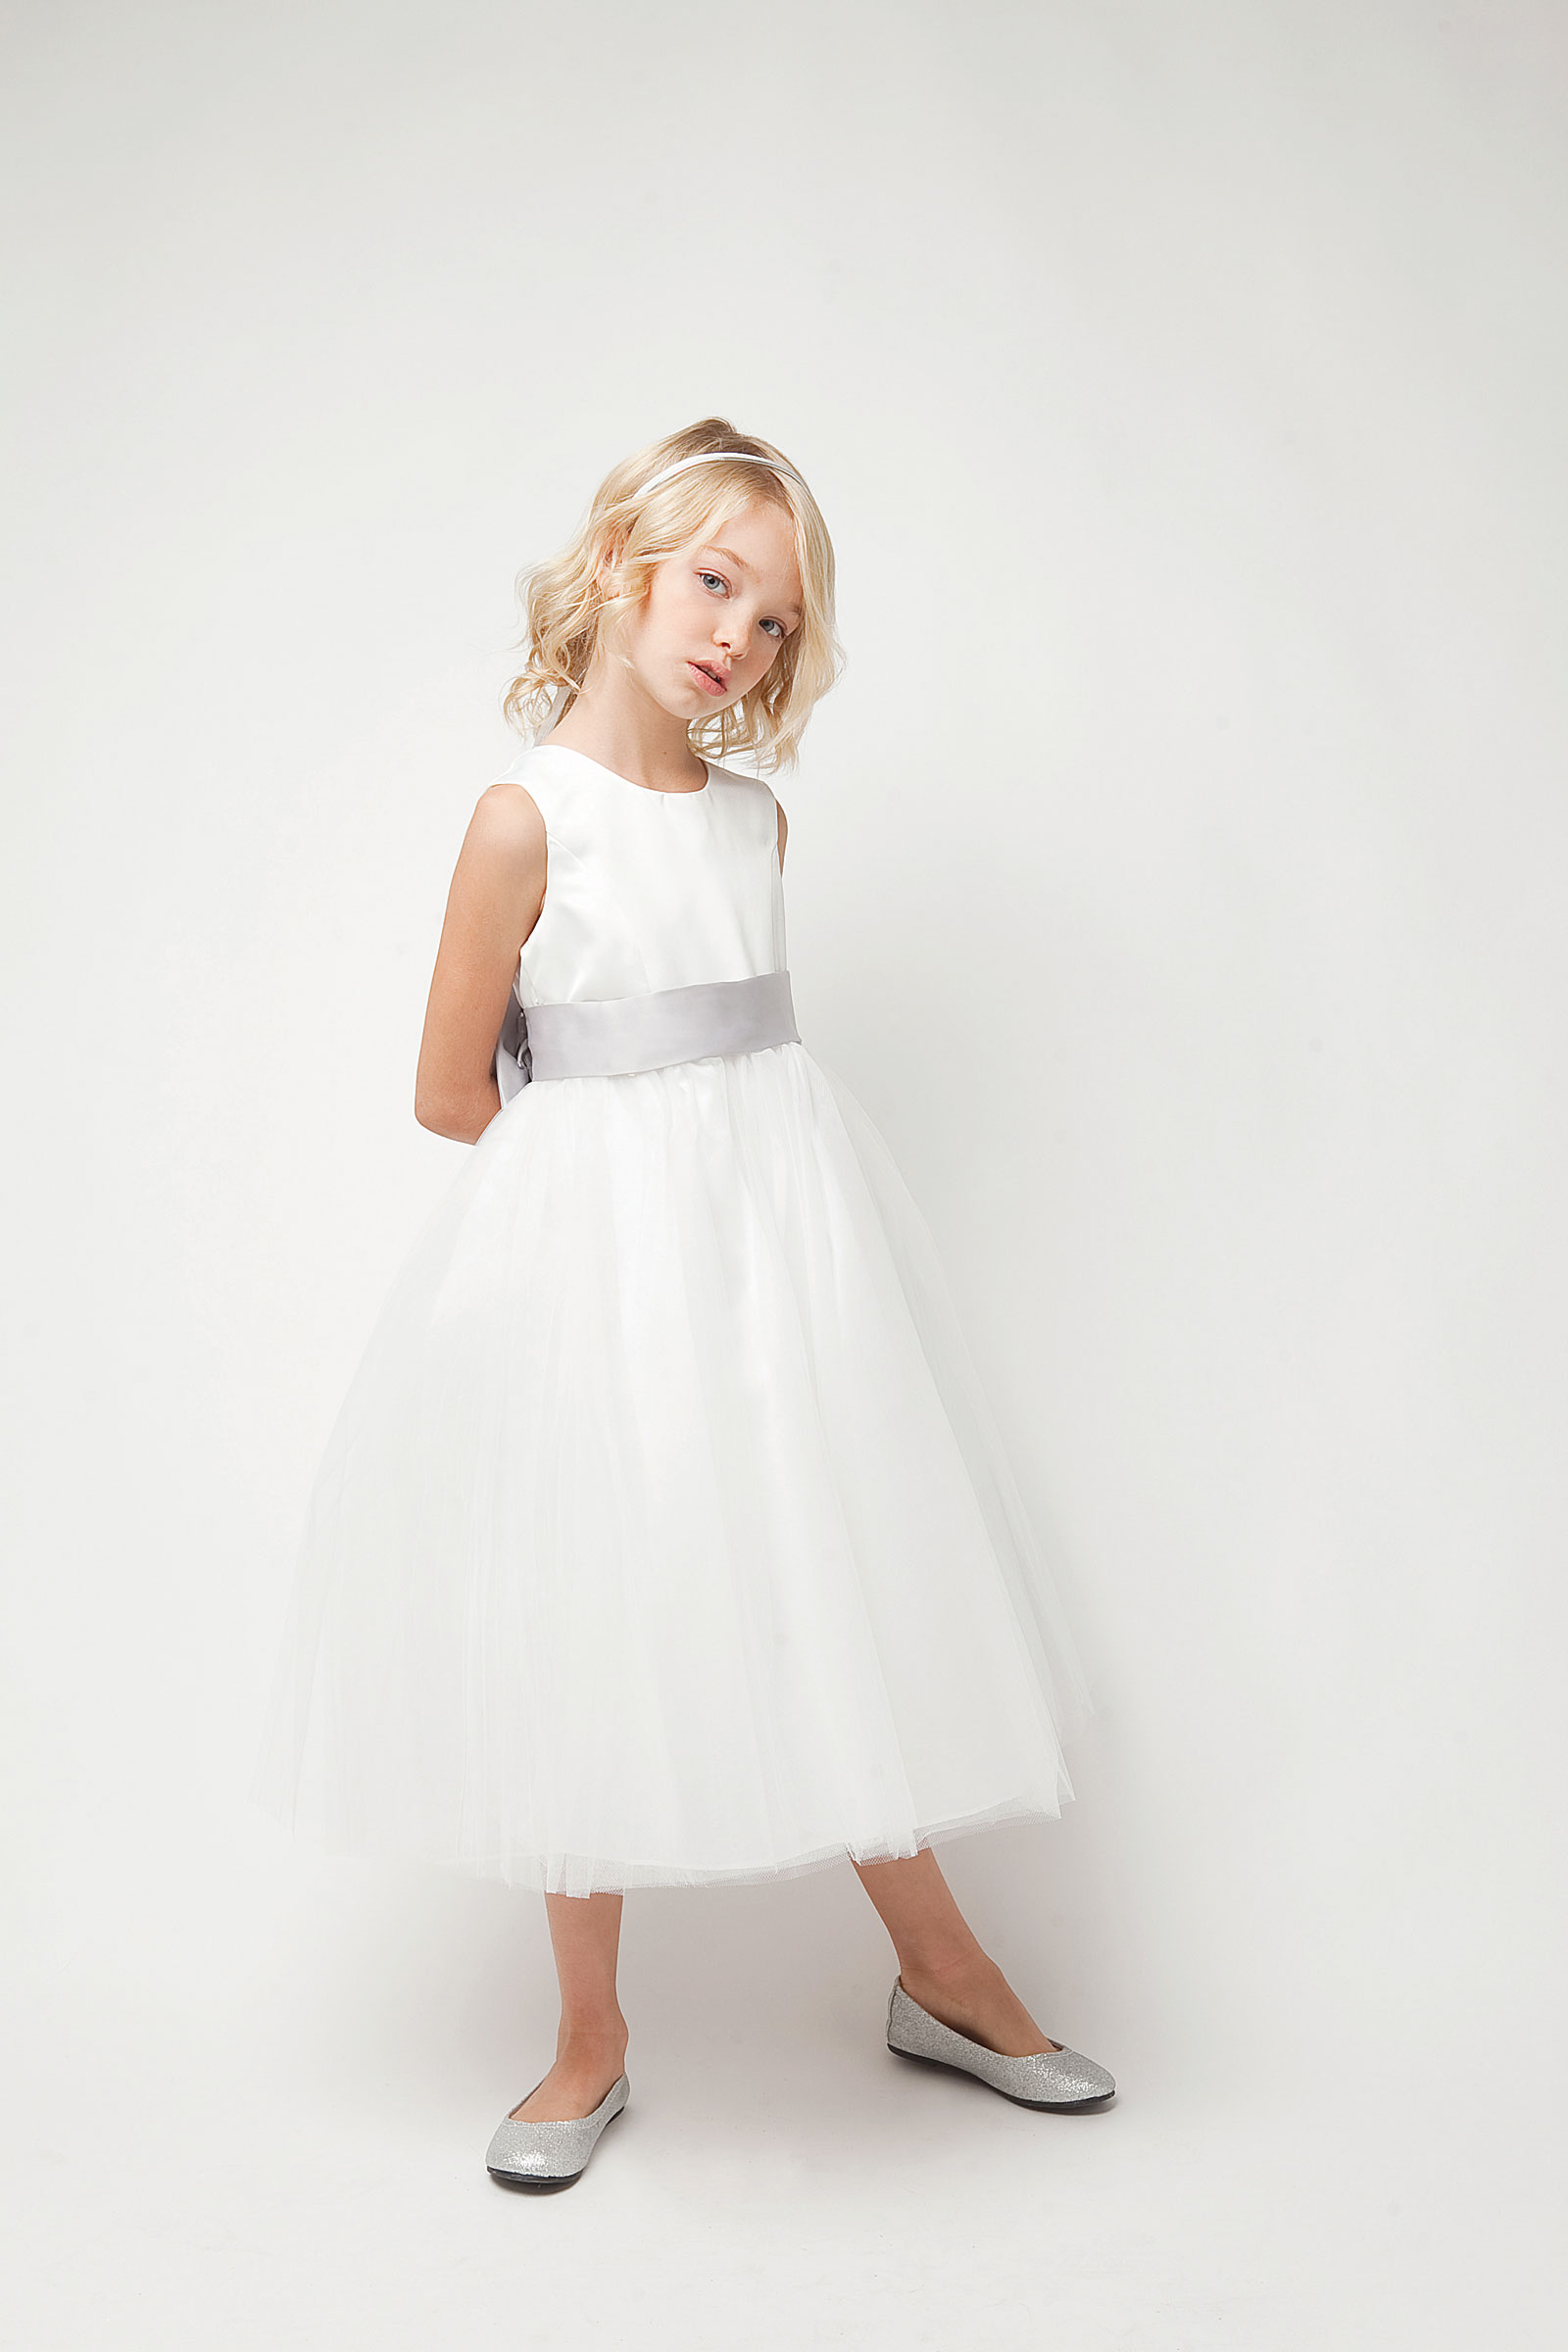 Tt 5700 14 Flower Girl Dress Style 5700 White Or Ivory Dress With